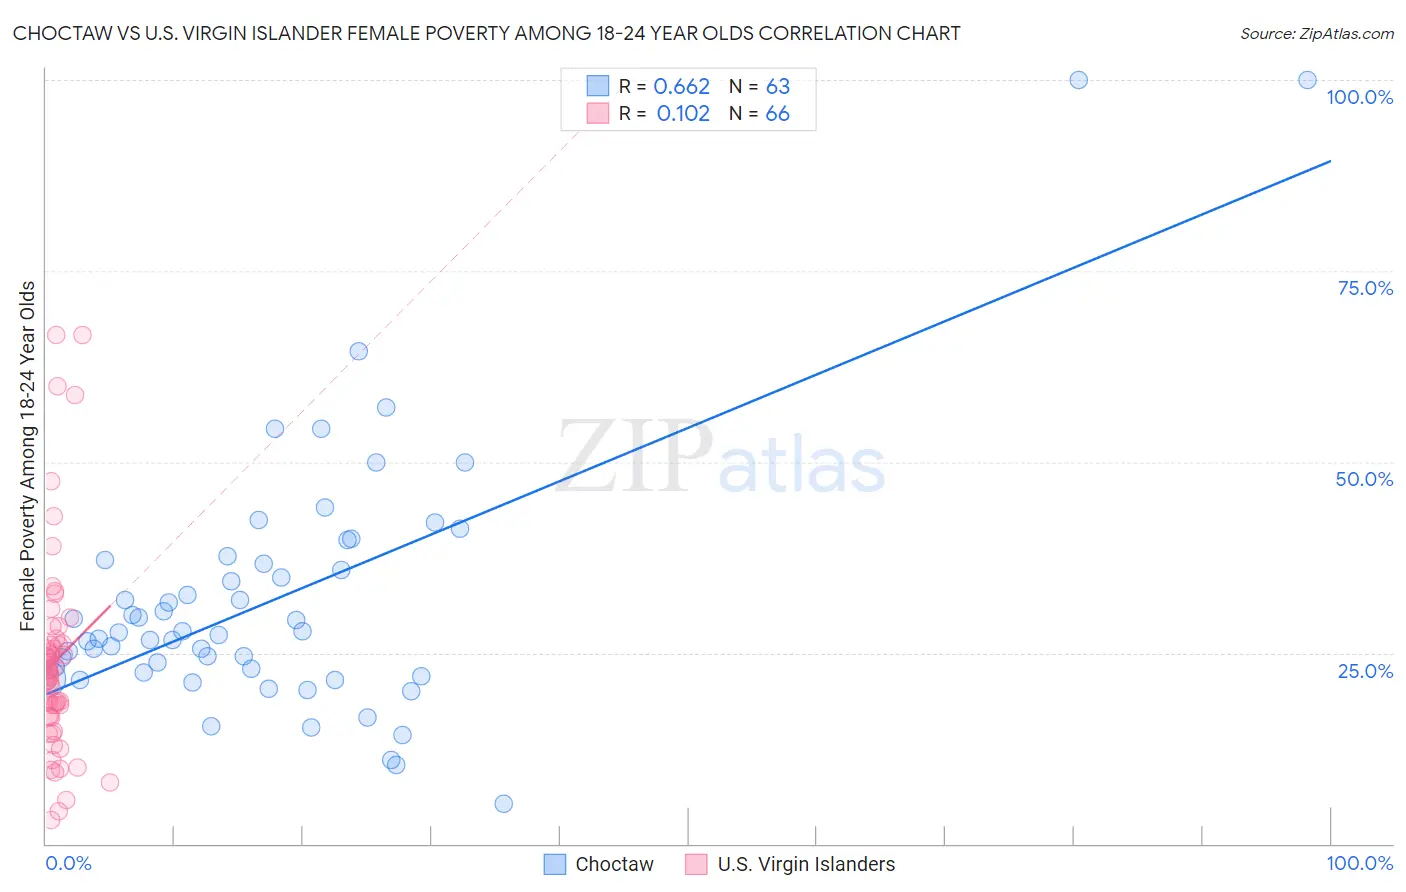 Choctaw vs U.S. Virgin Islander Female Poverty Among 18-24 Year Olds